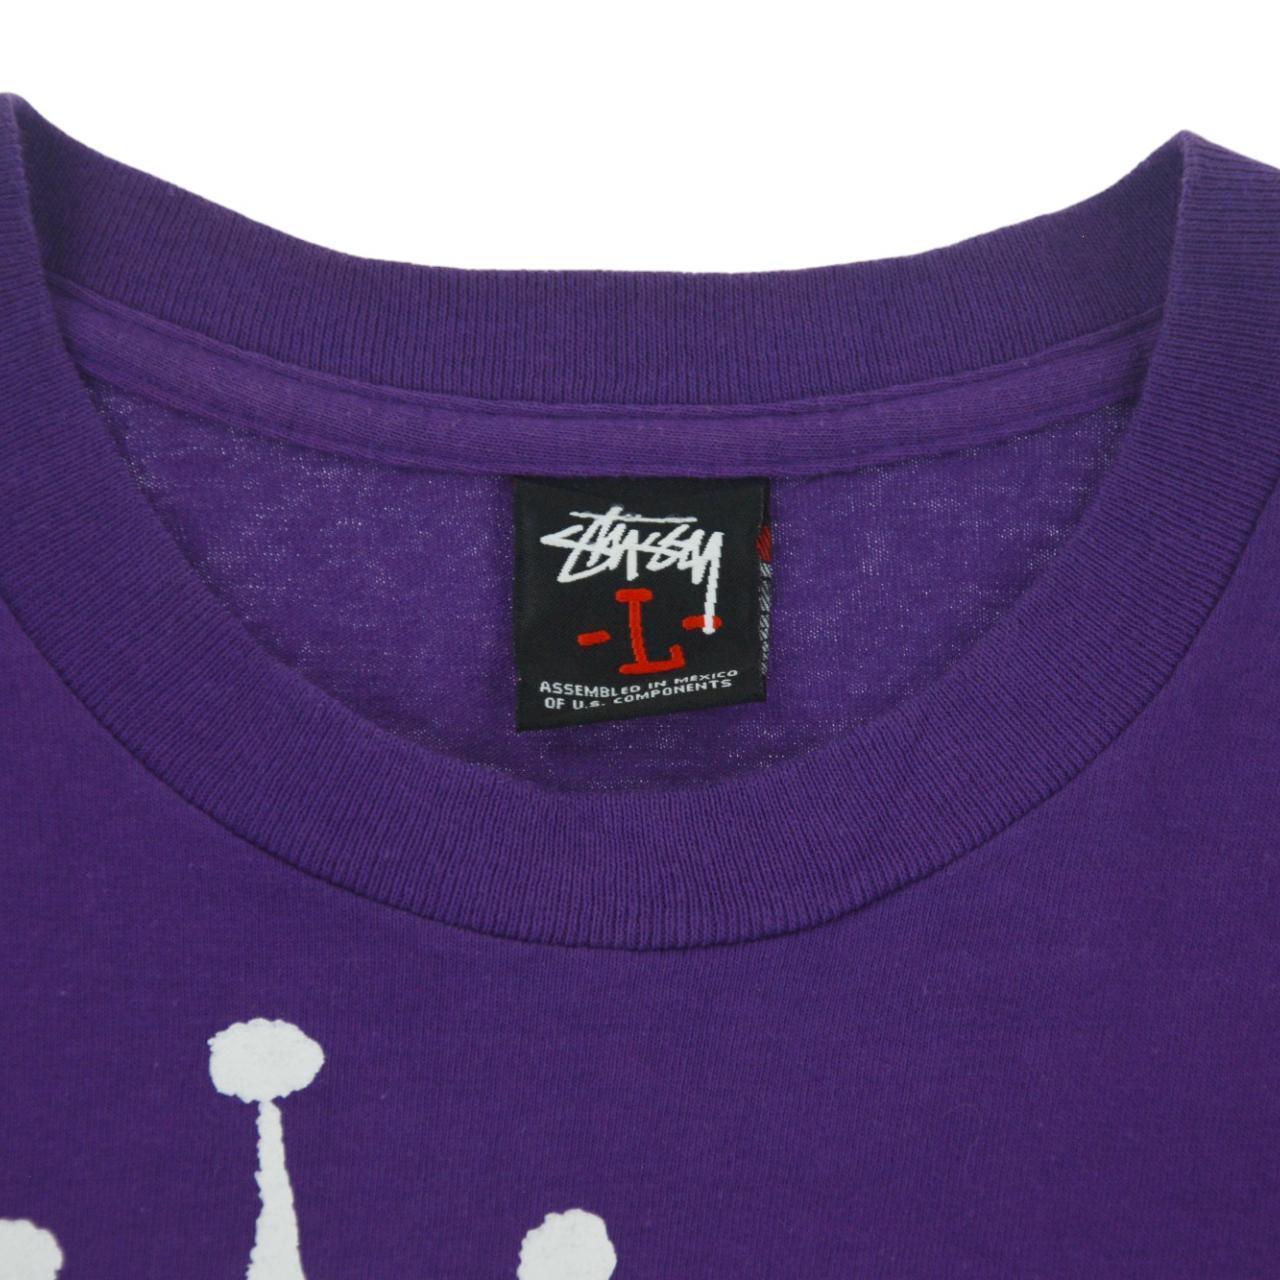 Vintage Stussy Graphic T Shirt Size L - Known Source